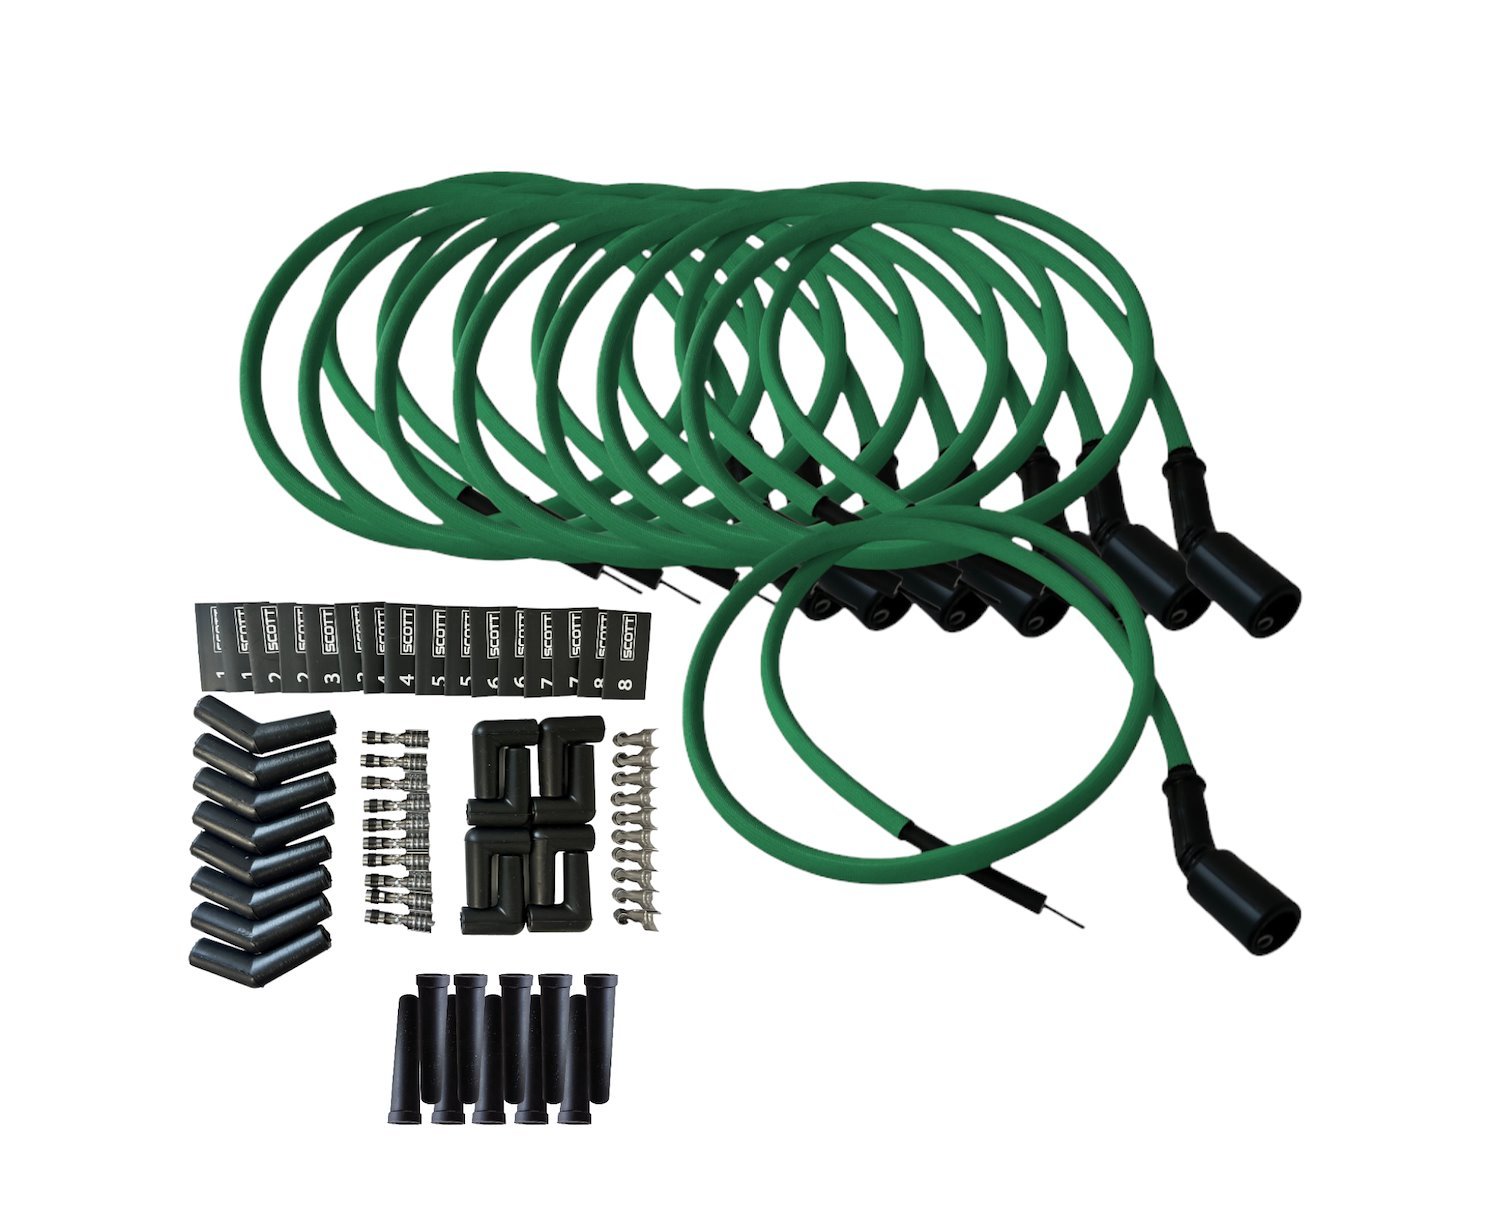 SPW-PS-LSRELO-4 DIY High-Performance Fiberglass-Oversleeved Spark Plug Wire Set for DIY Kits, GM LS [Green]